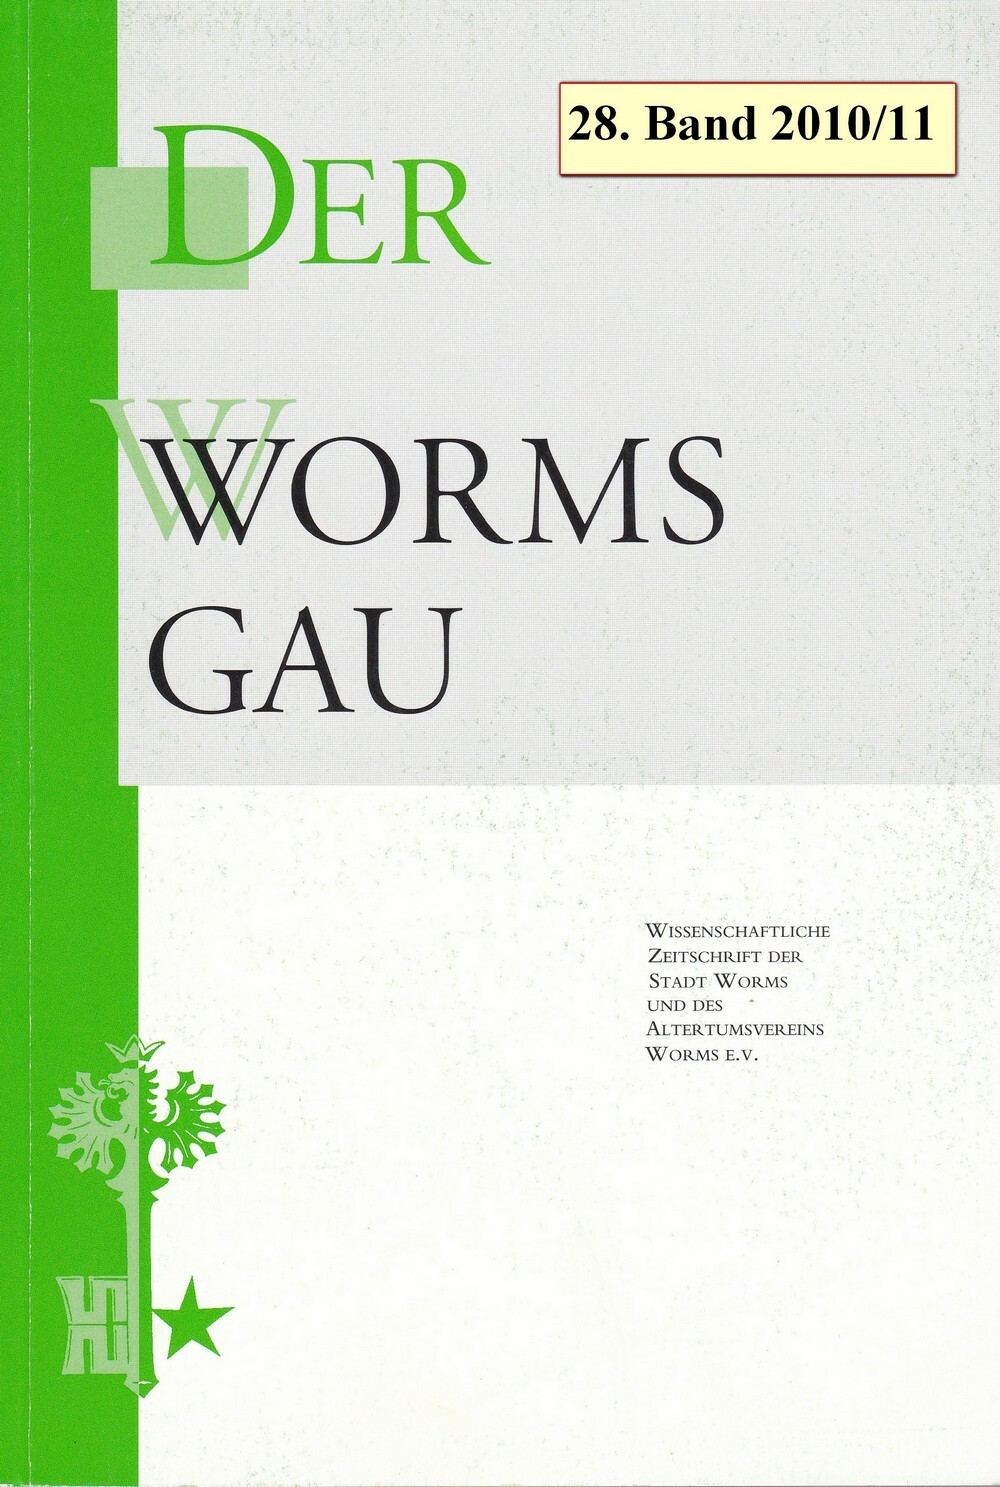 Der Wormsgau 28. Band - 2010 / 2011 (Kulturverein Guntersblum CC BY-NC-SA)